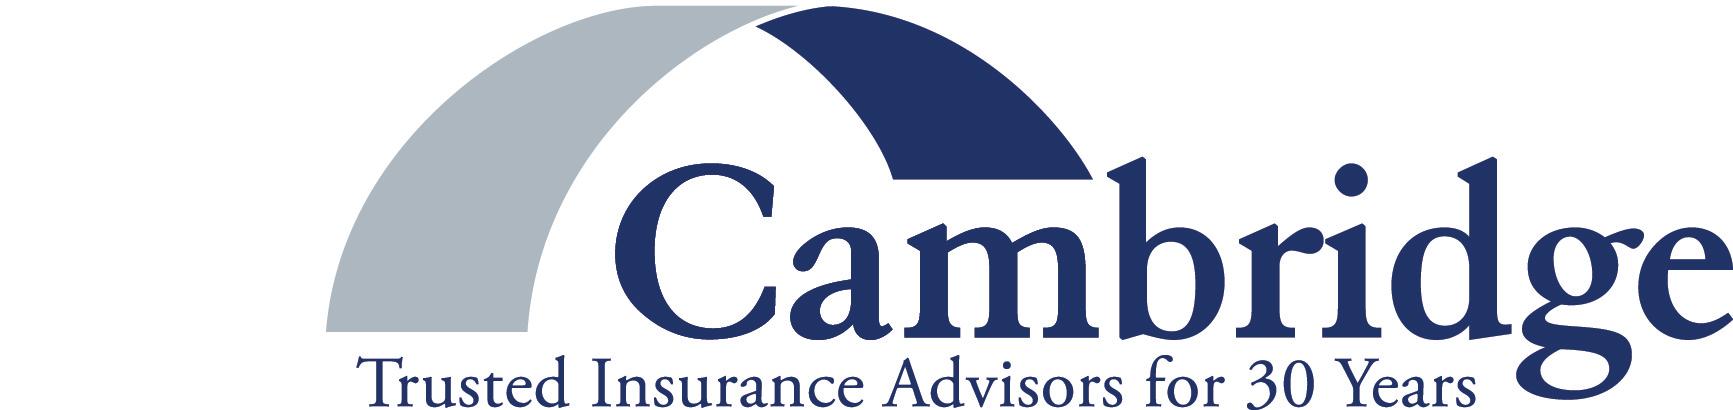 Cambridge Insurance Advisors - Portland, ME